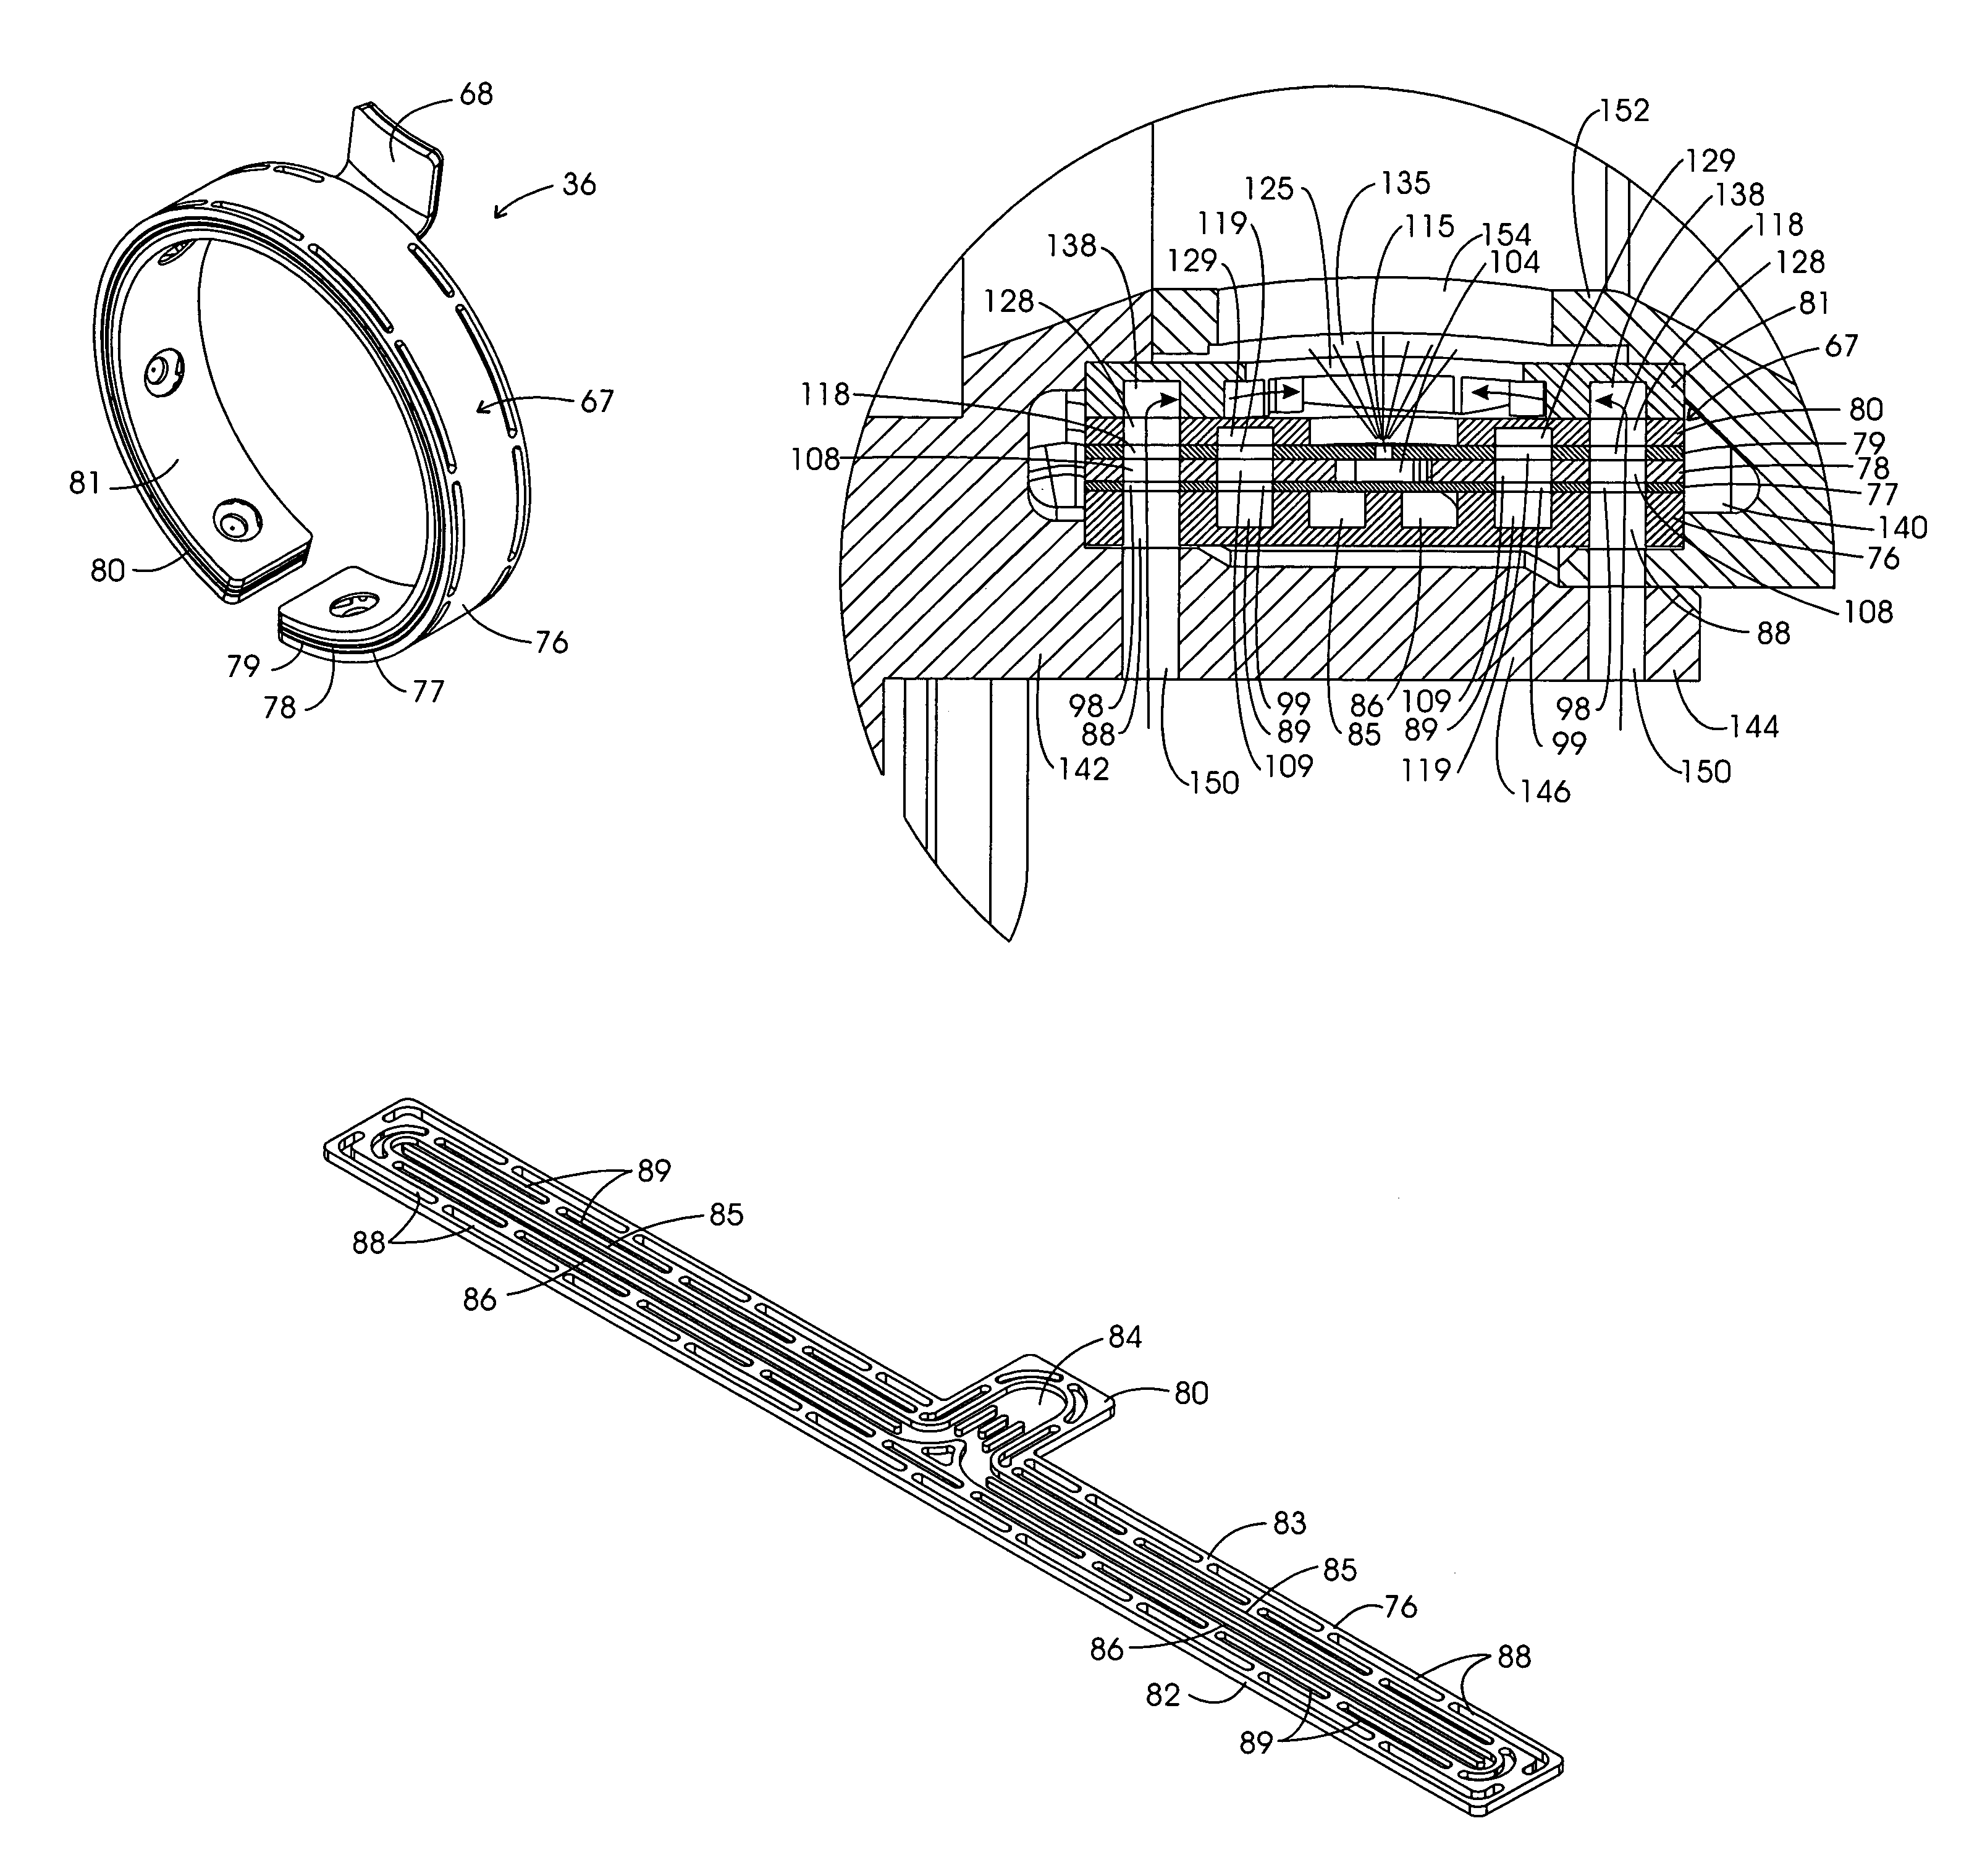 Macrolaminate radial injector